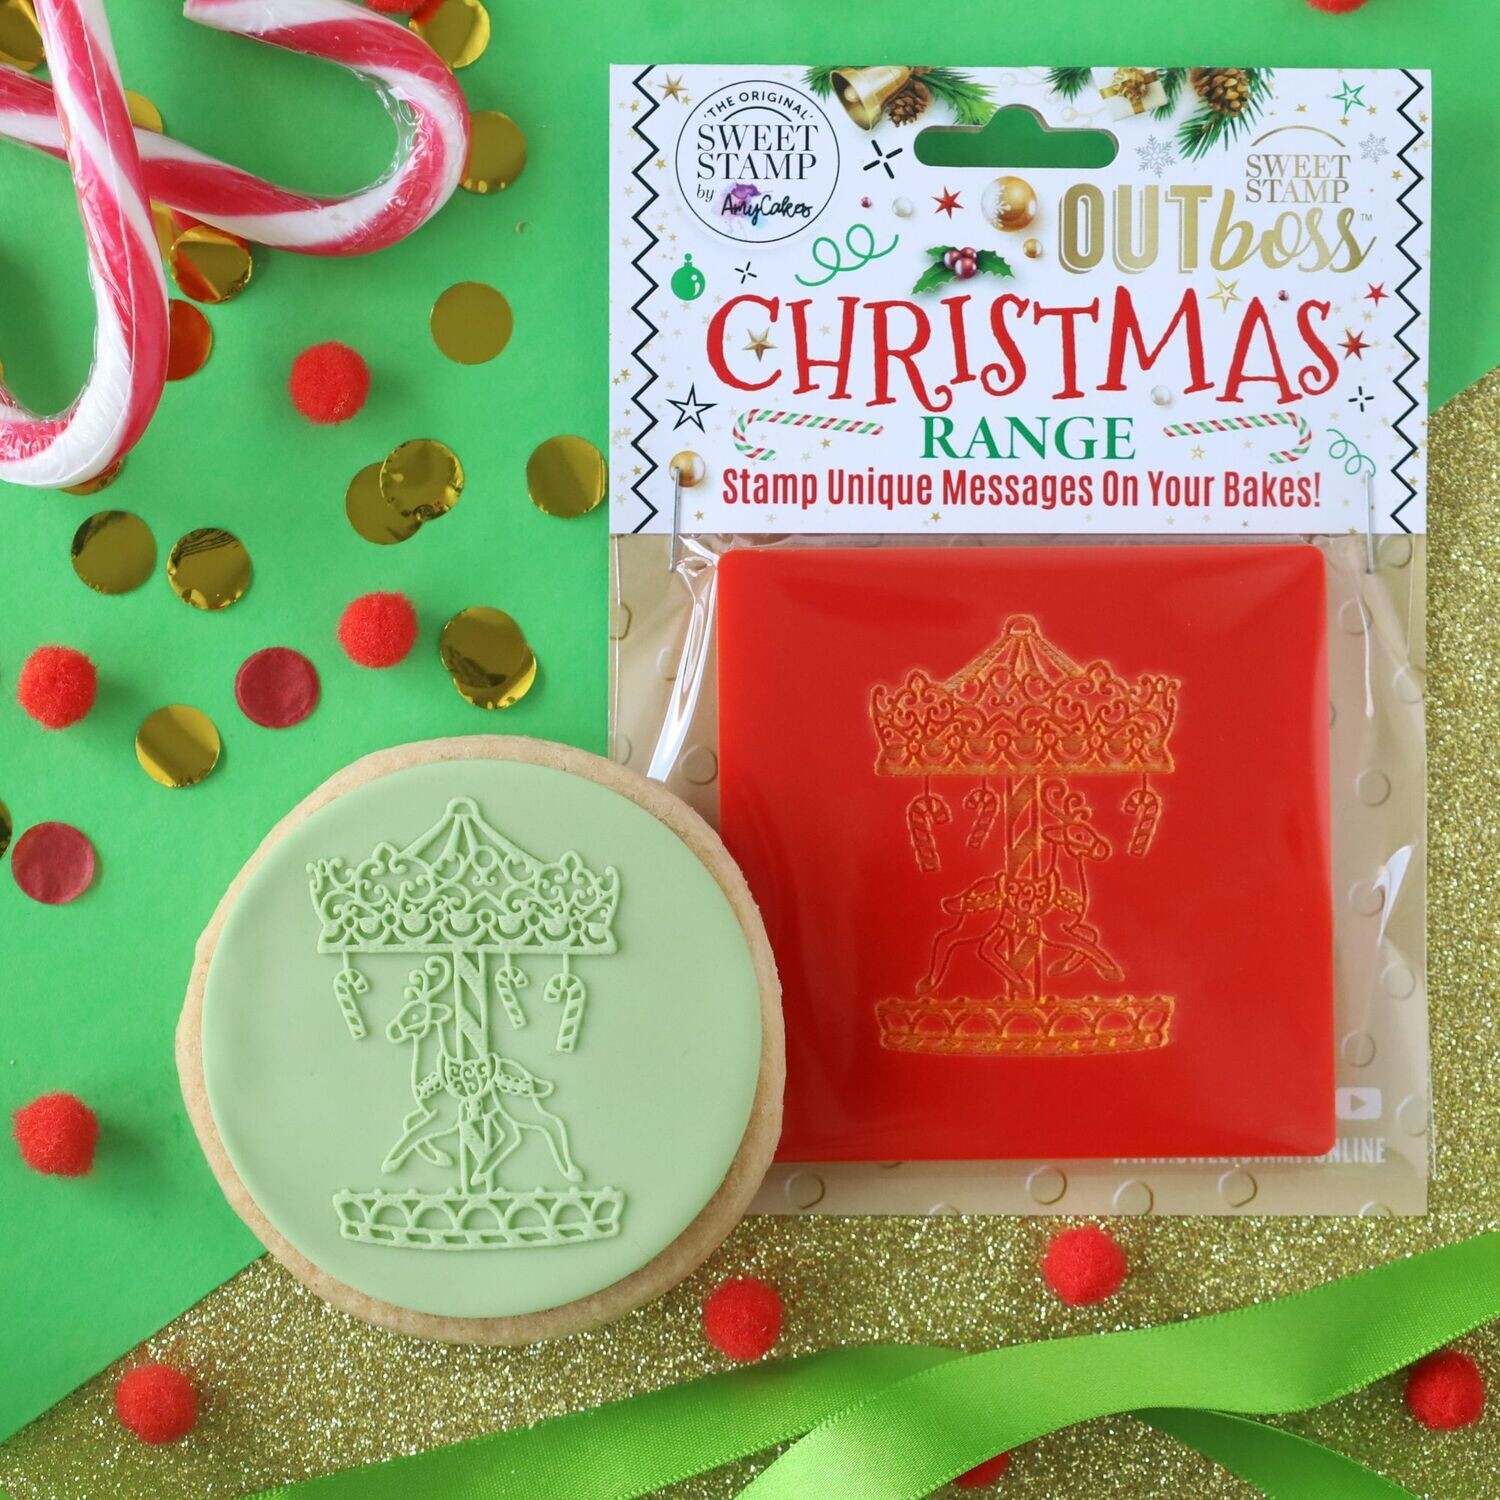 Sweet Stamp -OUTboss Christmas -CHRISTMAS CAROUSEL - Χριστουγεννιάτικη Σφραγίδα Καρουζέλ